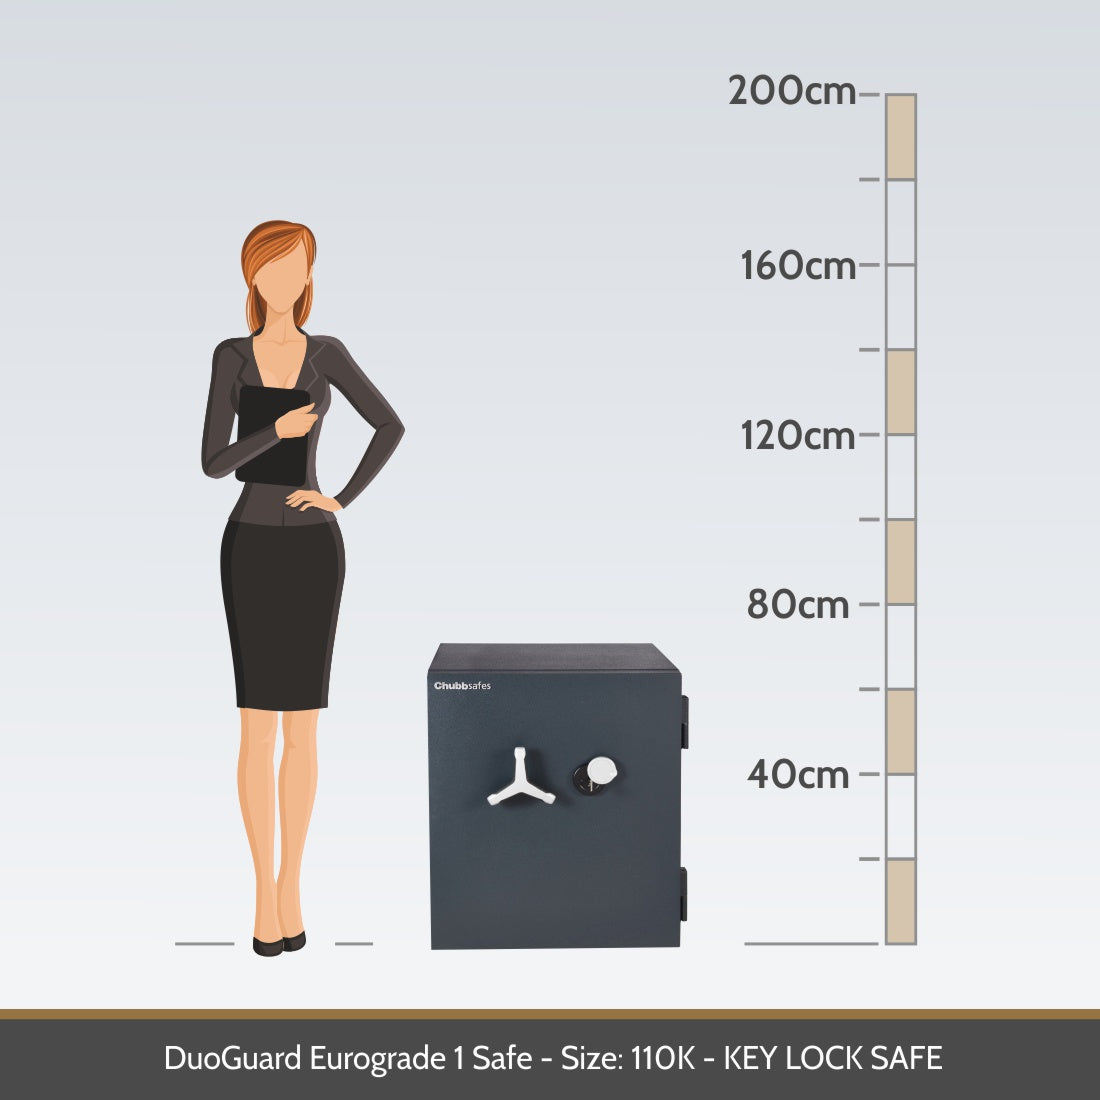 Chubbsafes, DuoGuard Eurograde 1 Safe - Size: 110K - KEY LOCK